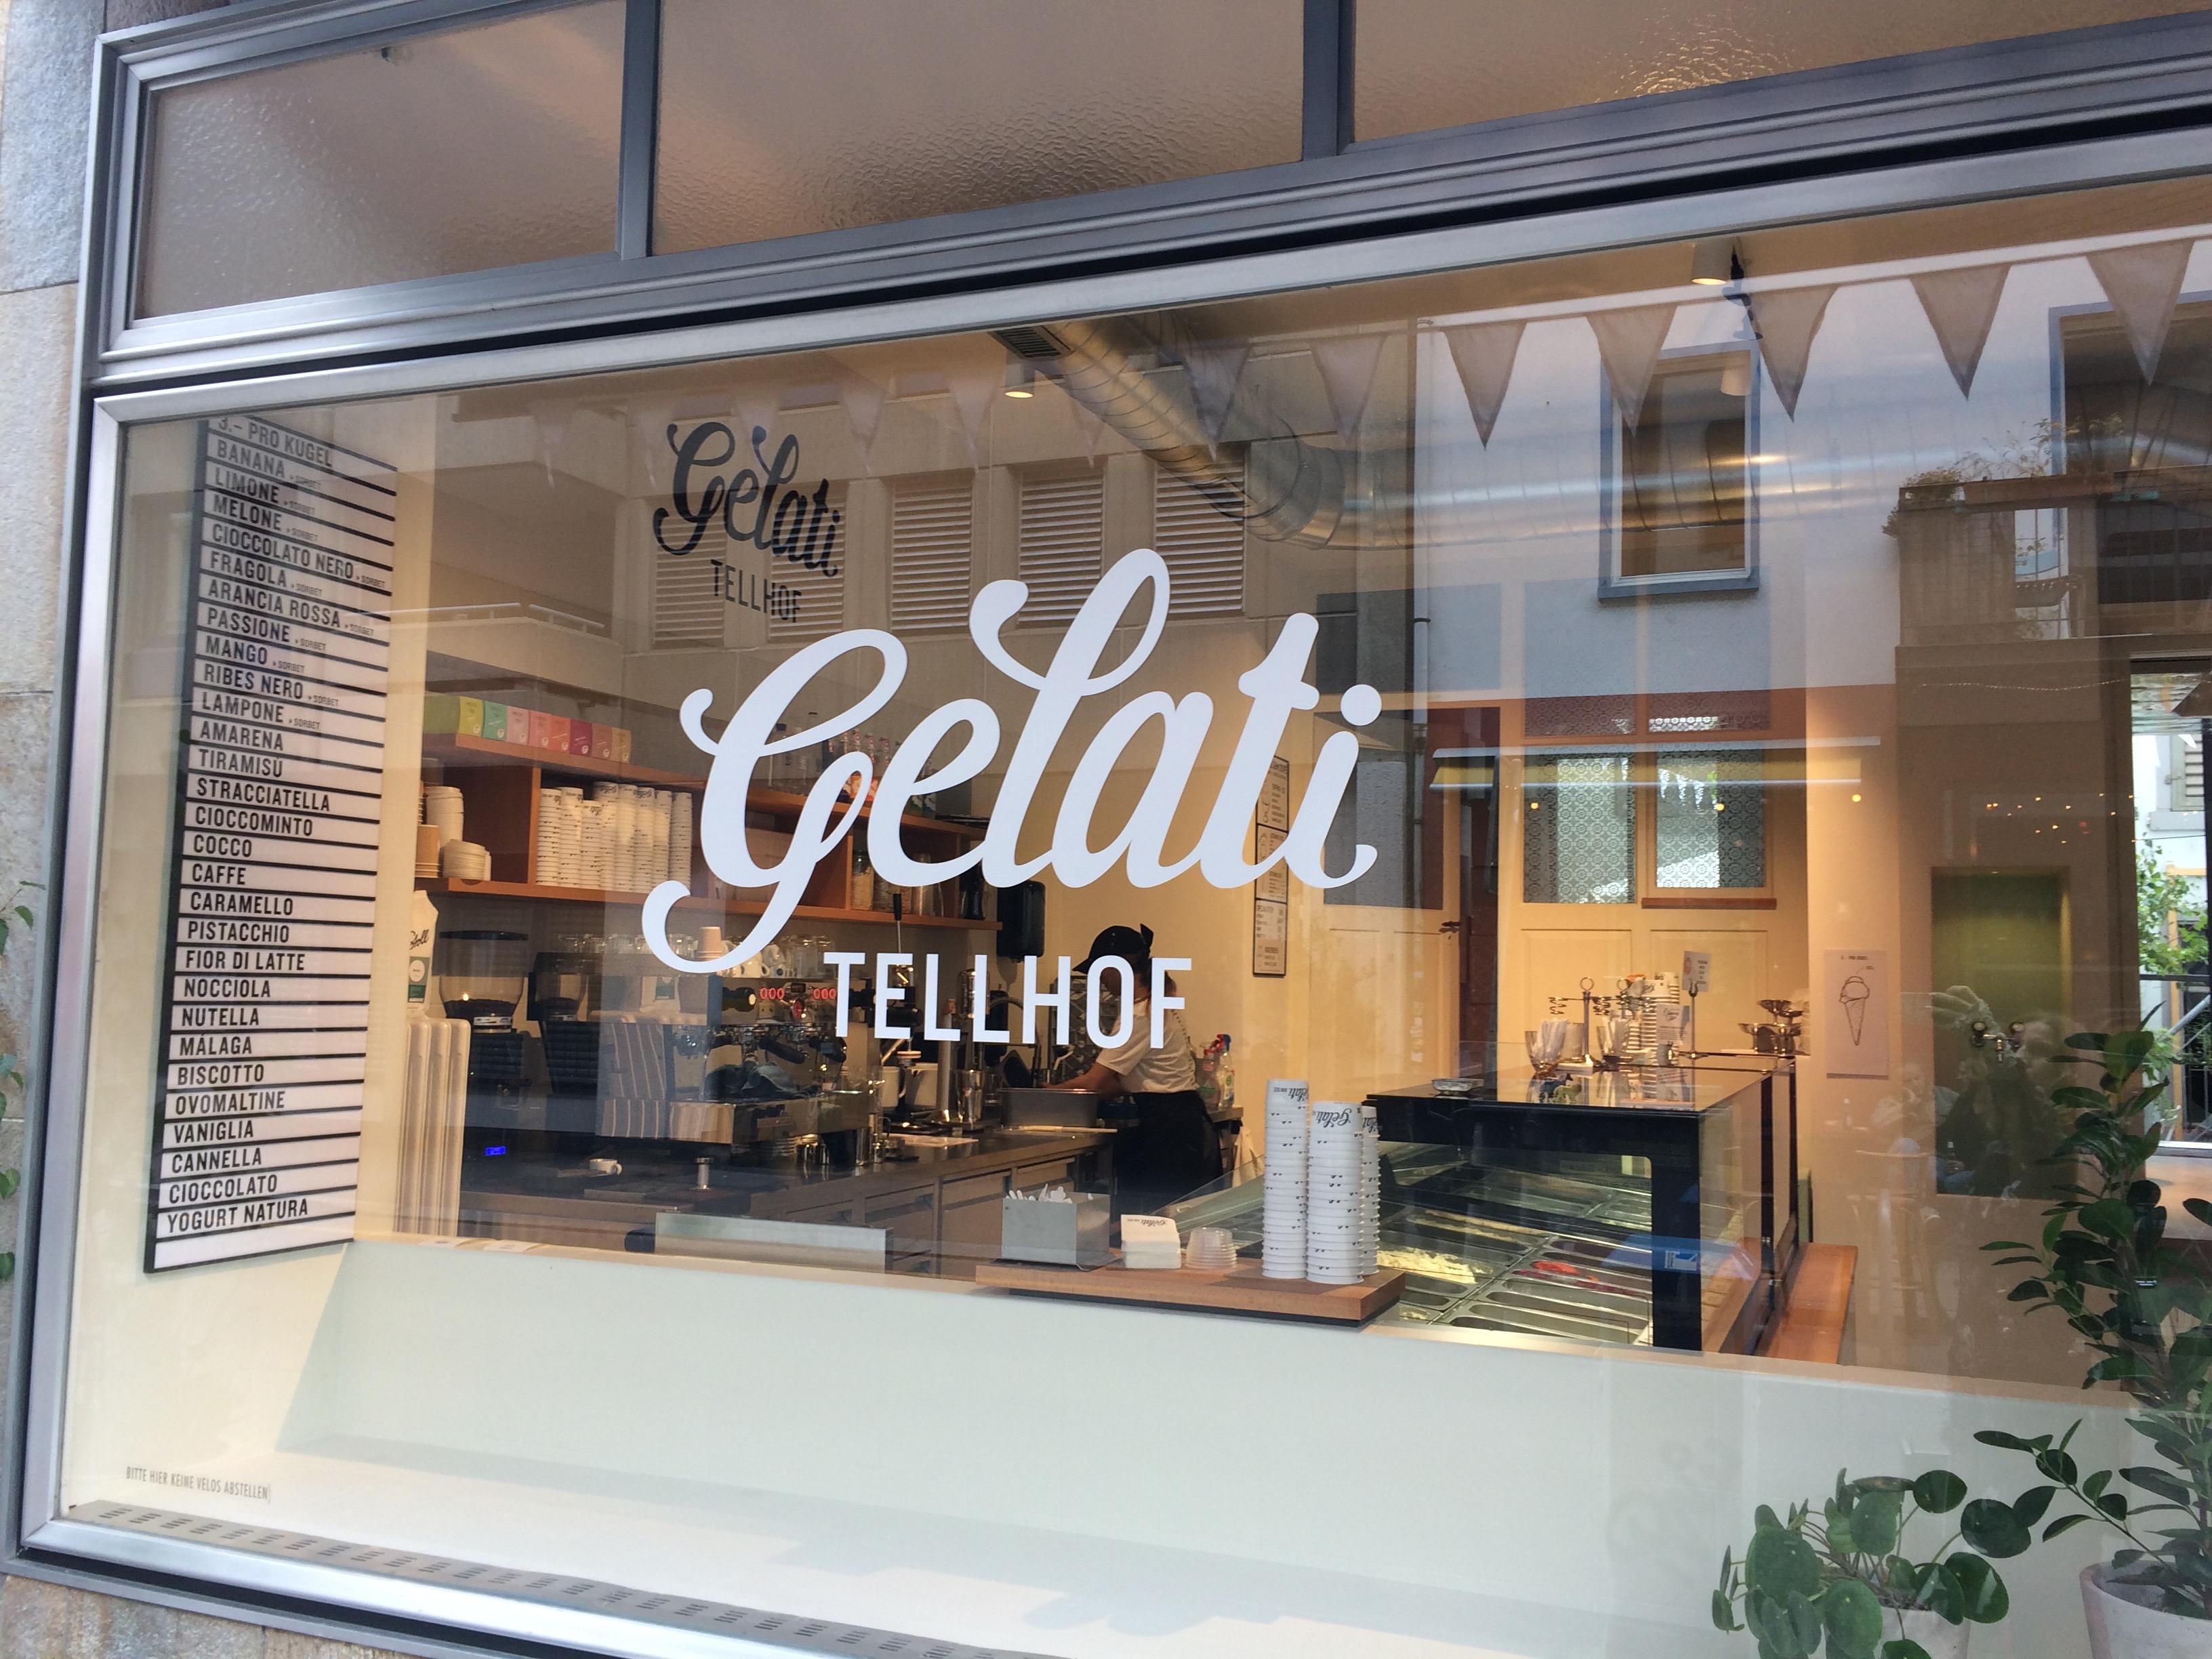 Cover image of this place Gelati Tellhof